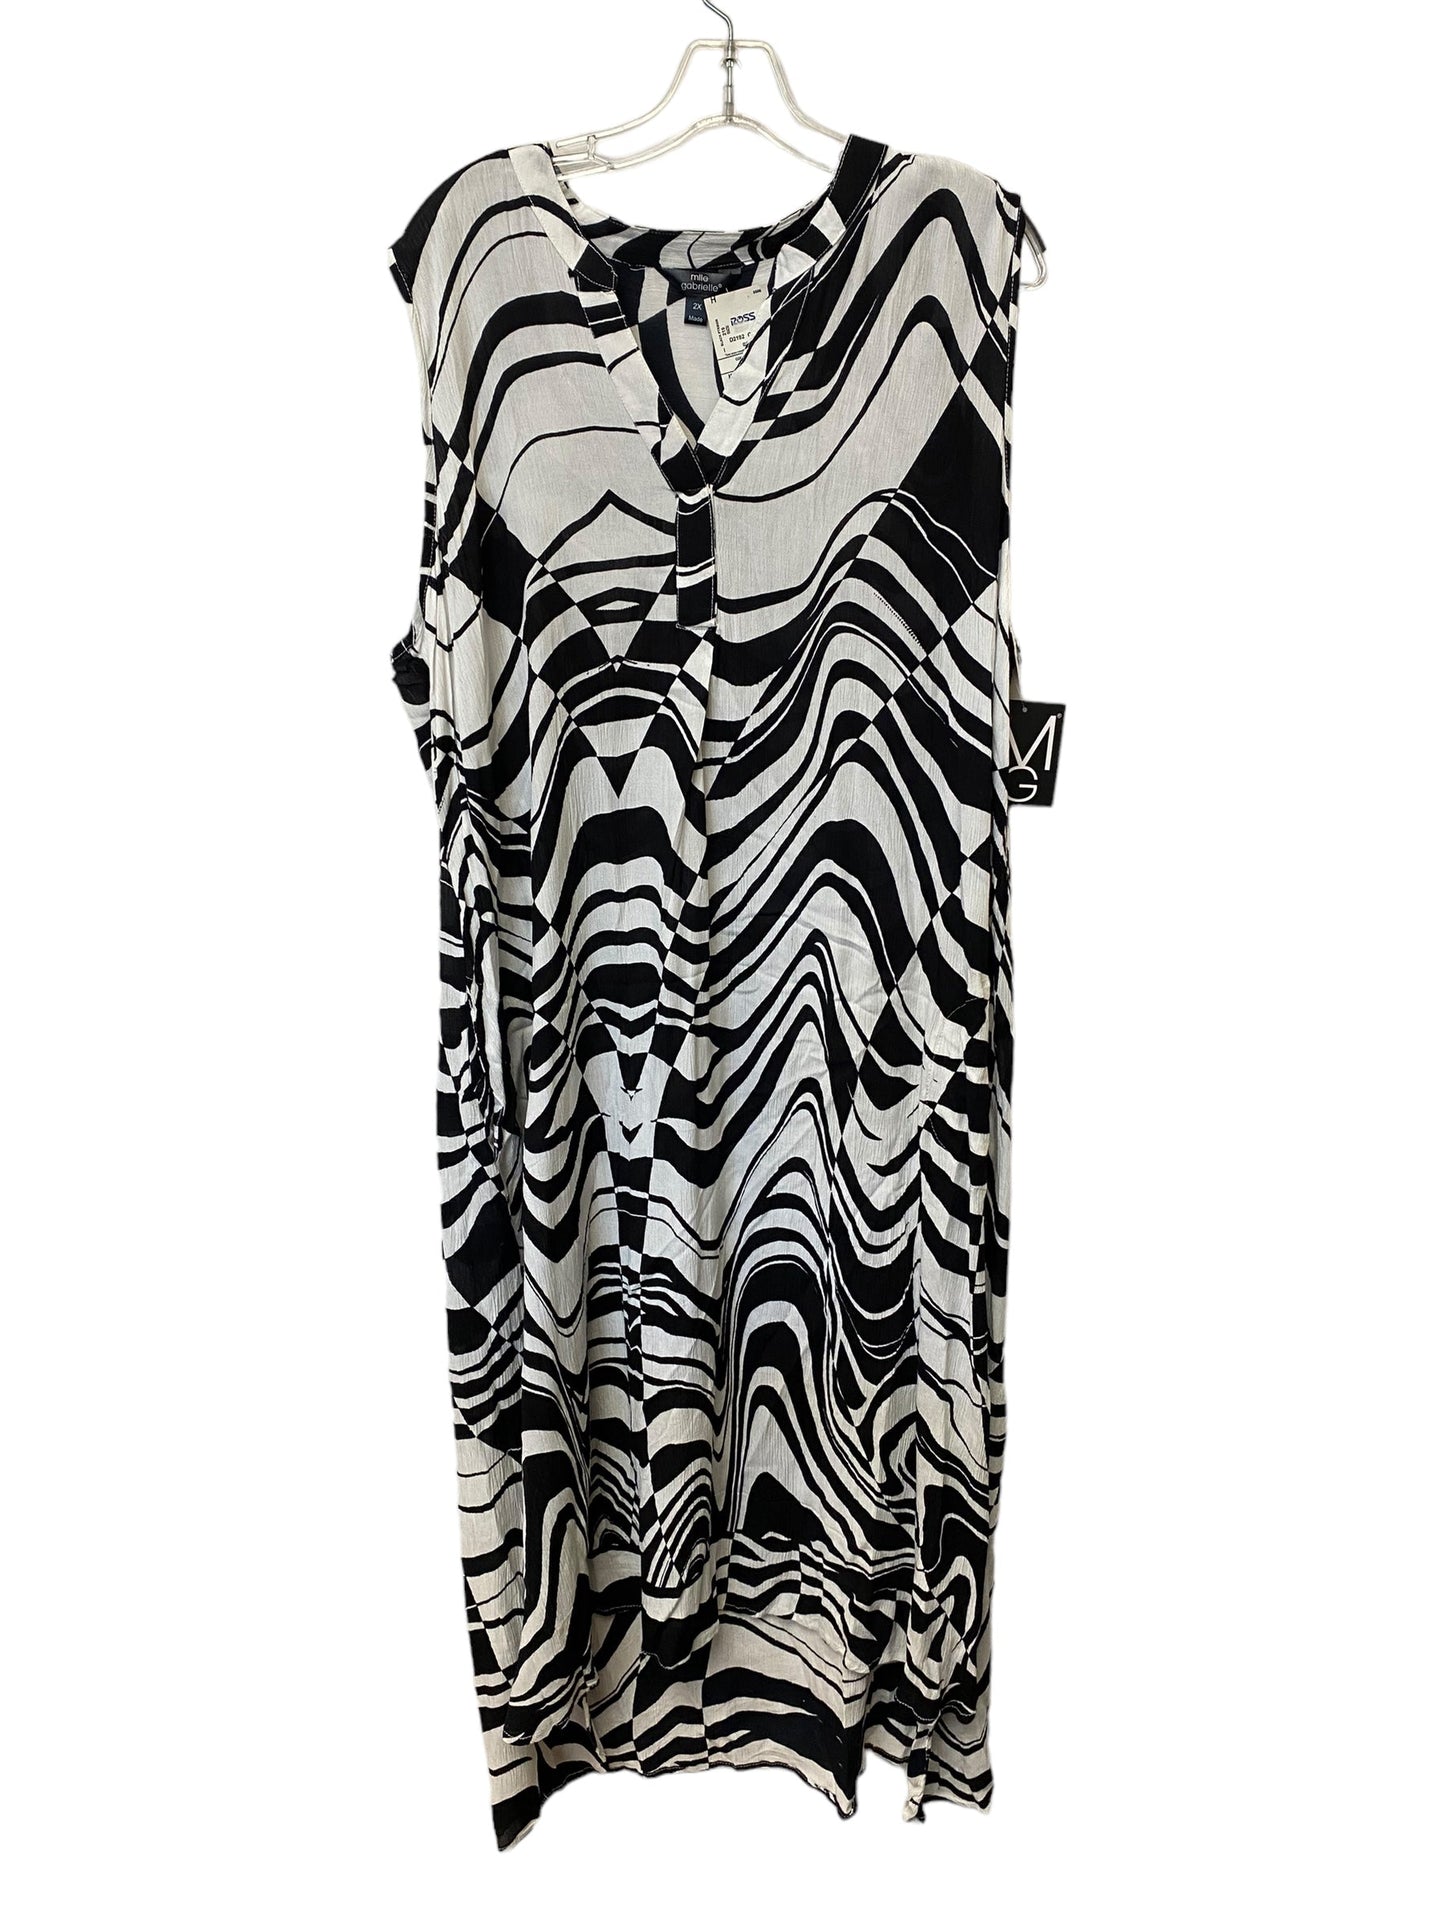 Black & White Dress Casual Maxi Mlle Gabrielle, Size 2x